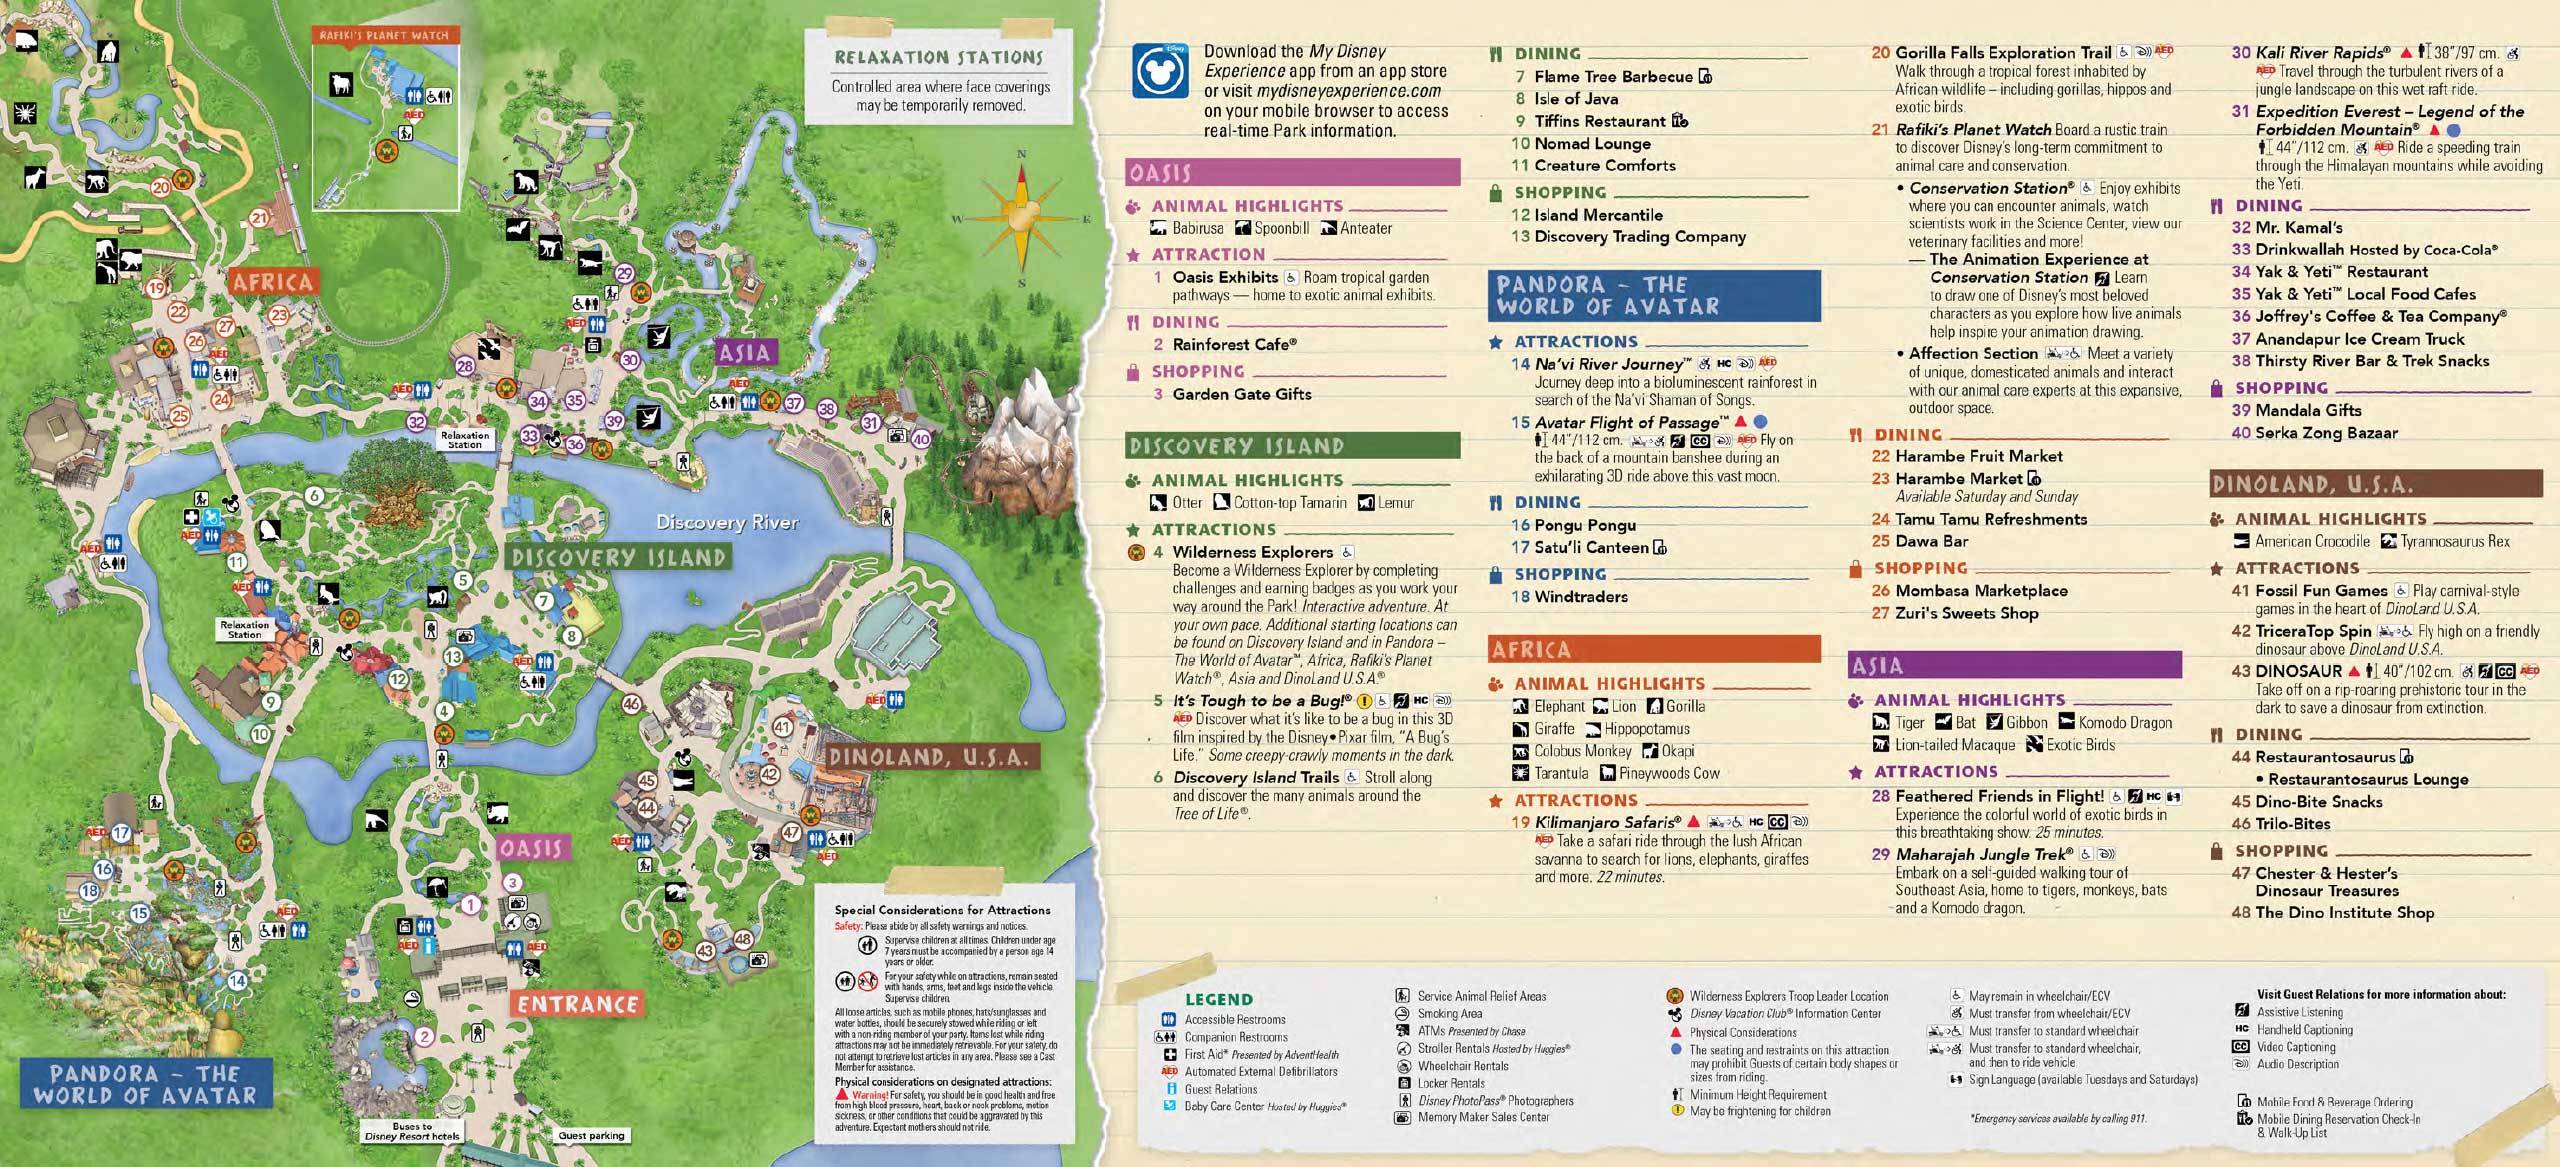 Disney's Animal Kingdom December 2020 guidemap - Photo 2 of 3